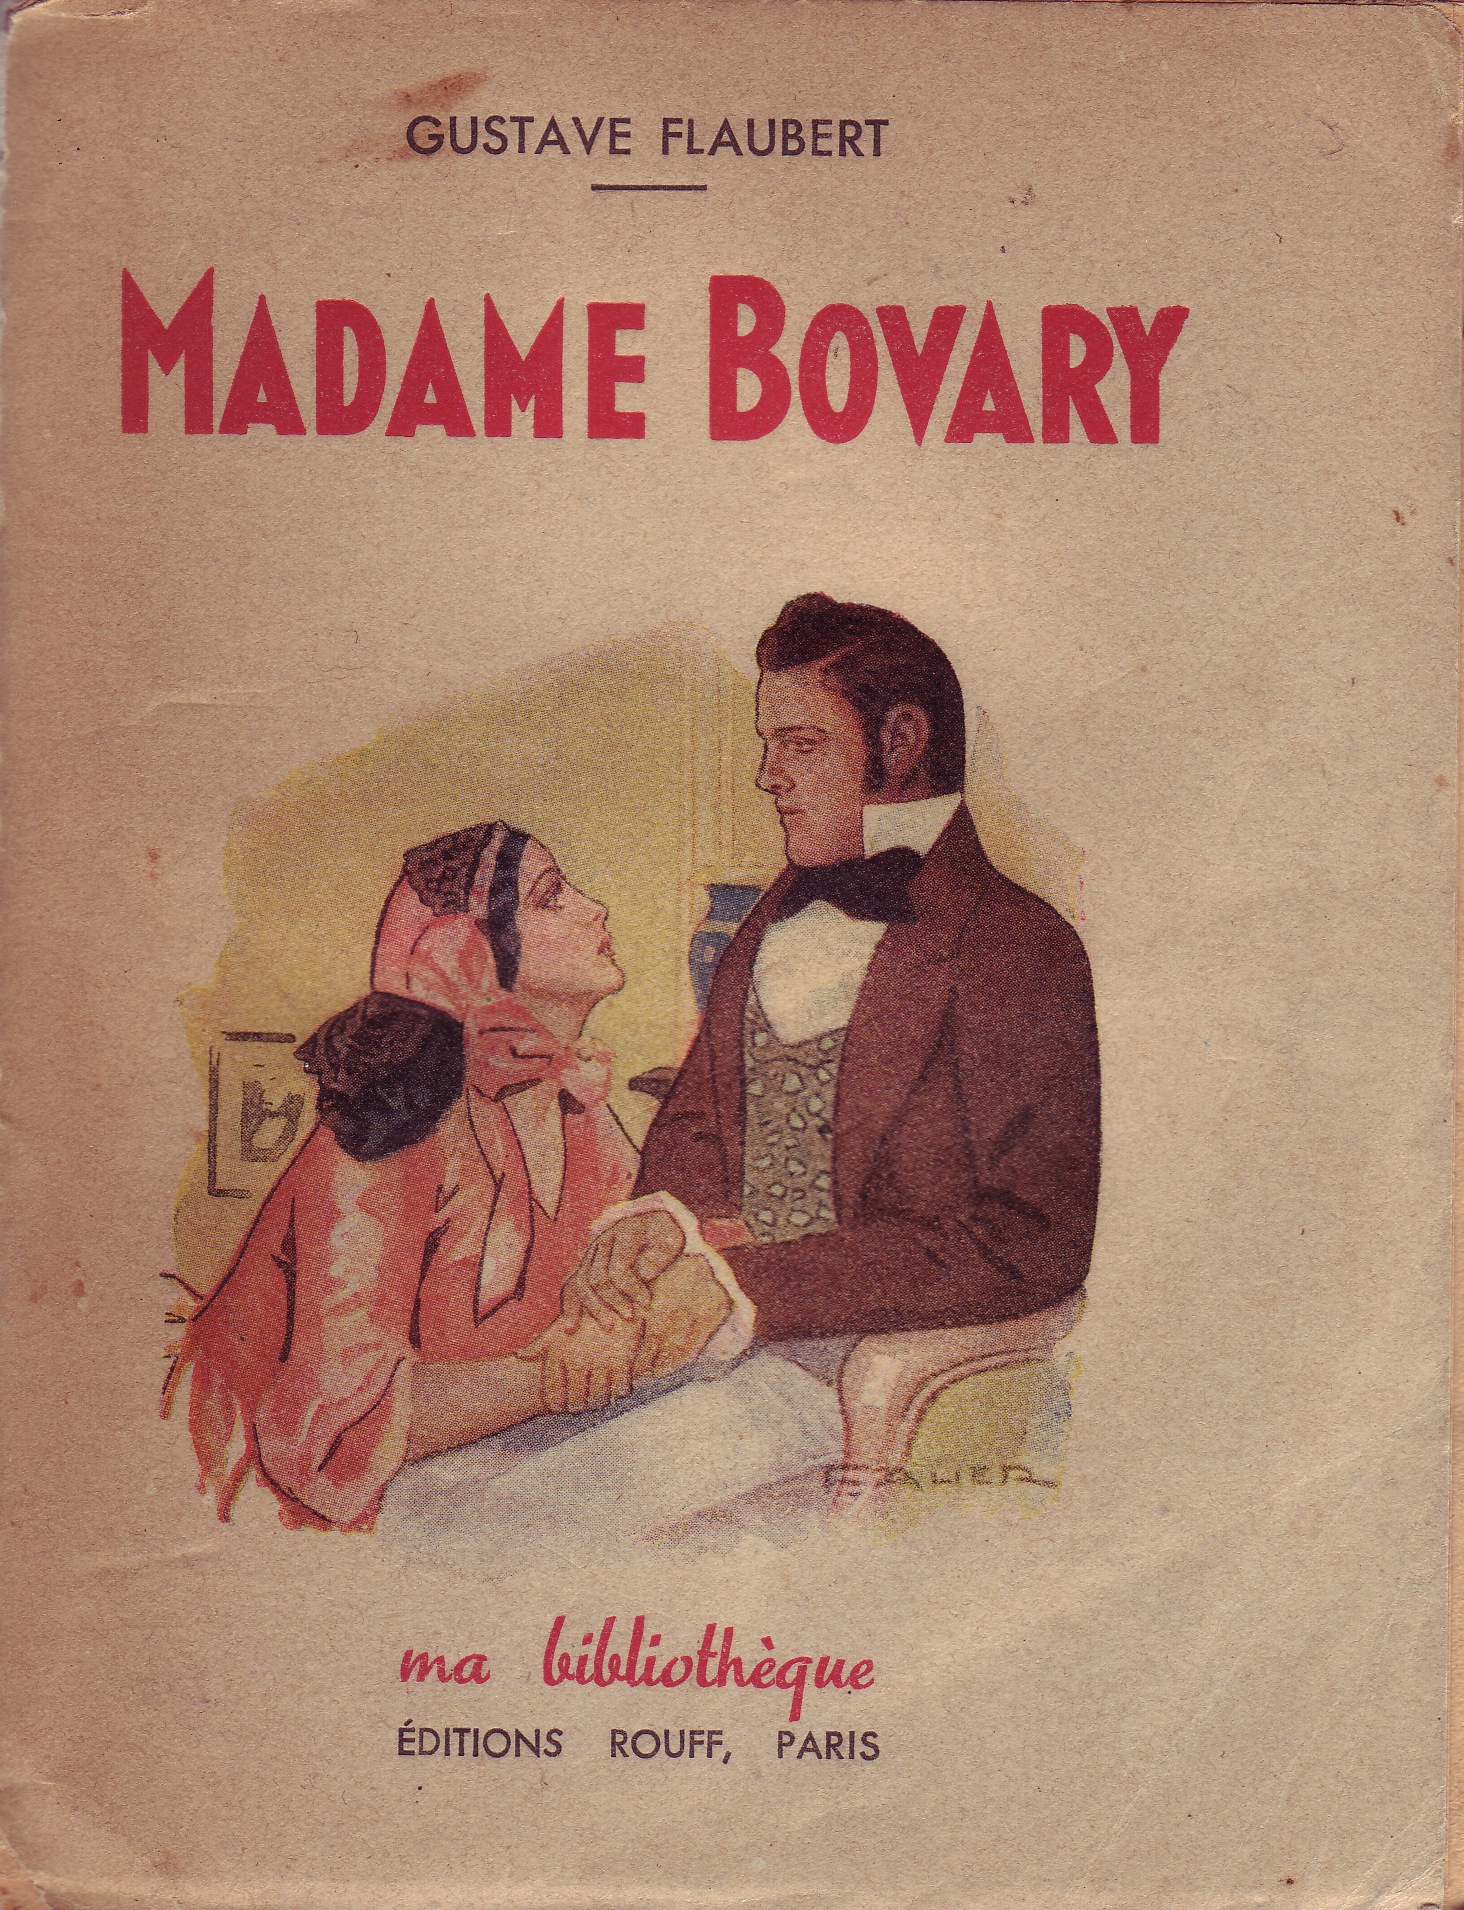 Tone madame bovary essay